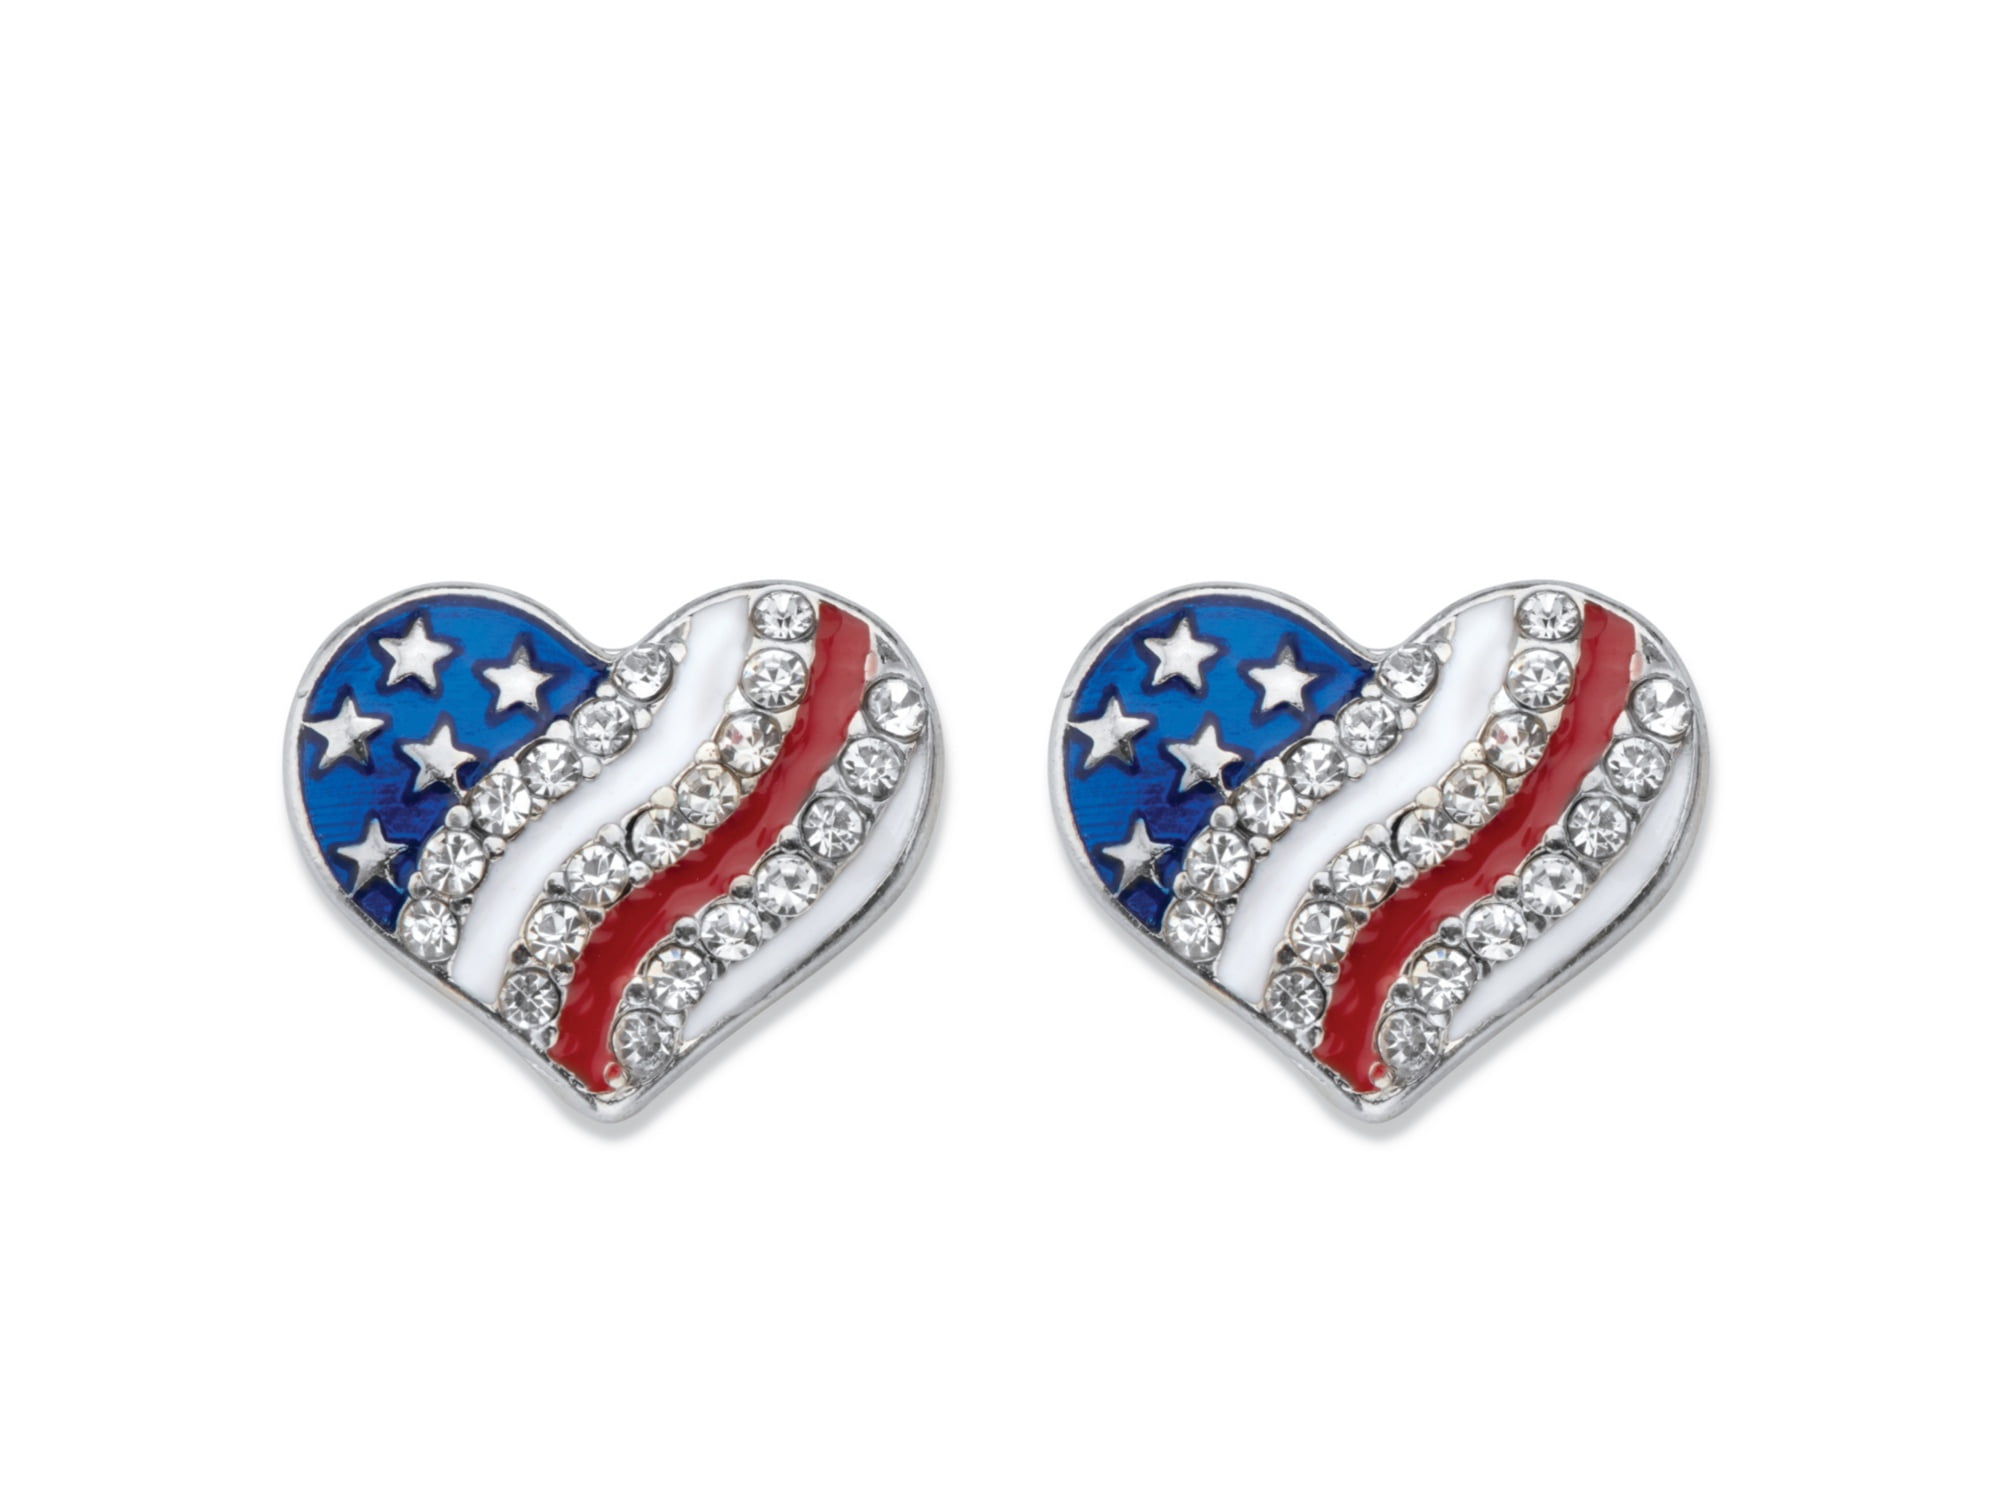 Crystal and Enamel Heart-Shaped American Flag Patriotic Holiday Earrings in Stainless Steel